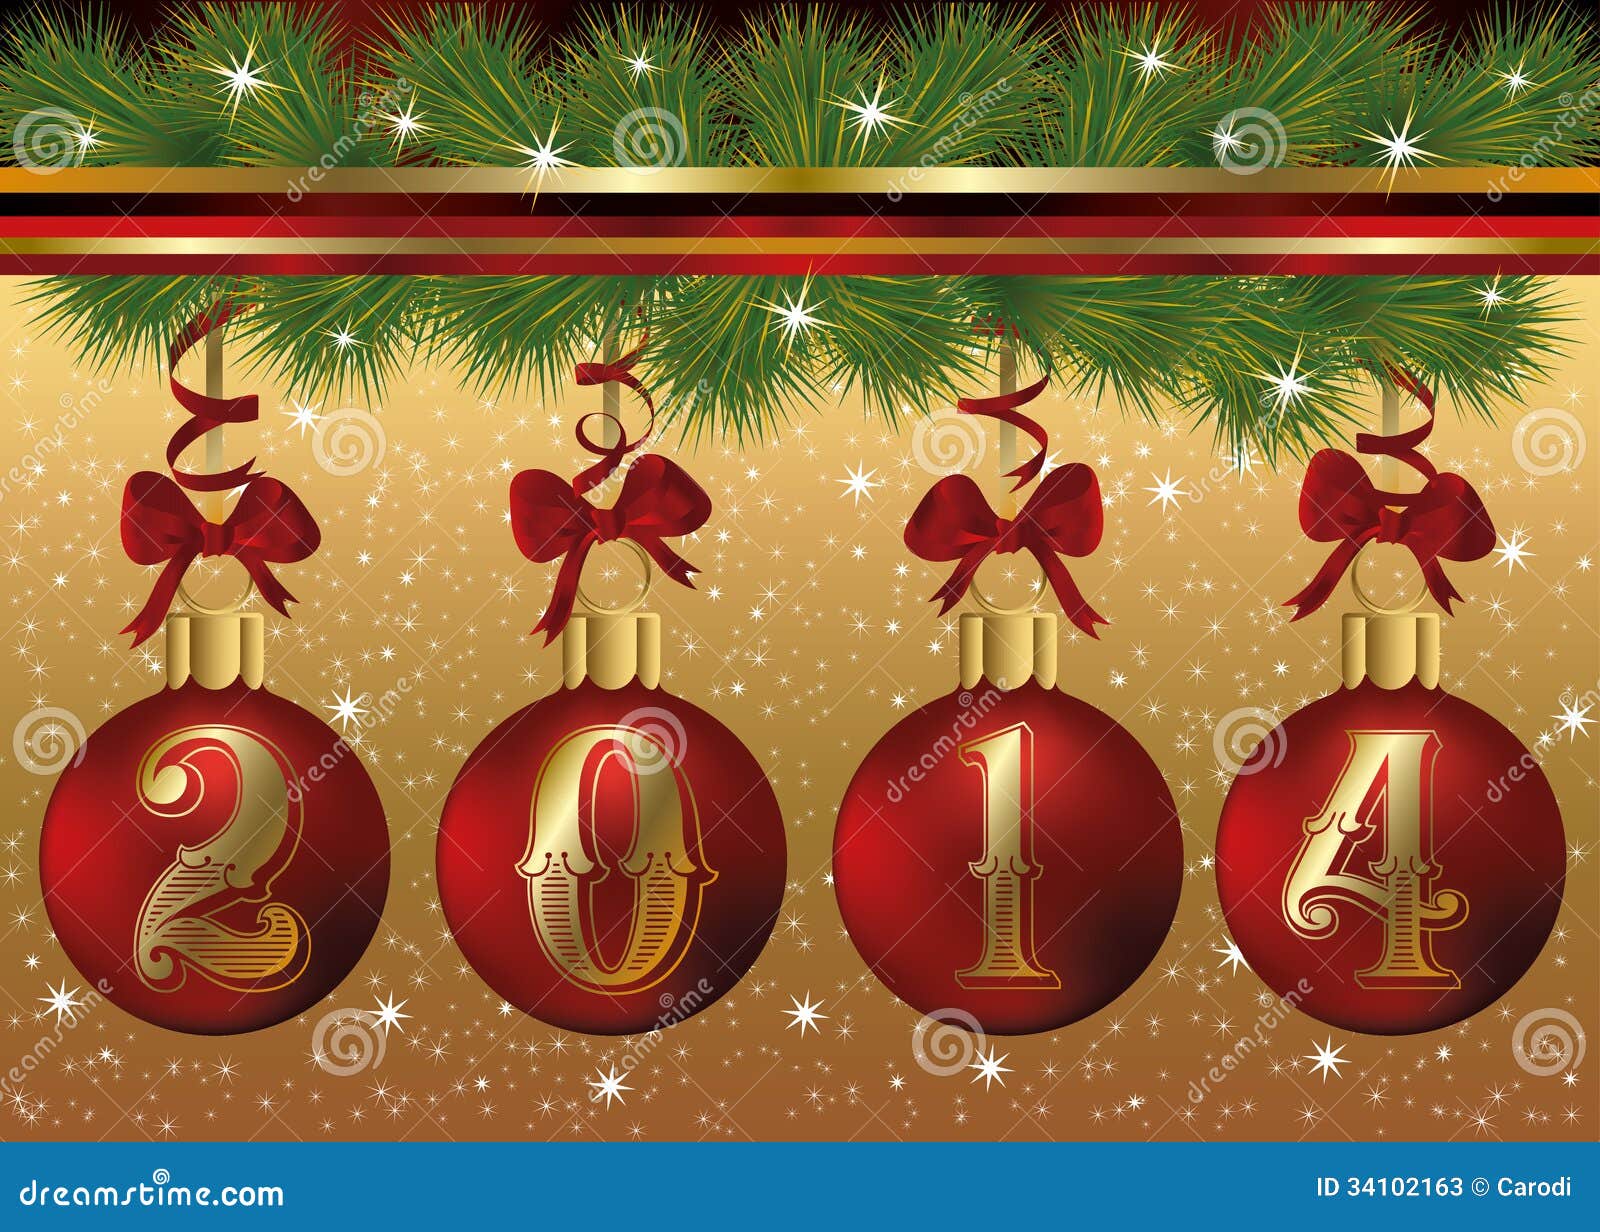 happy new year 2014 banner clip art - photo #13